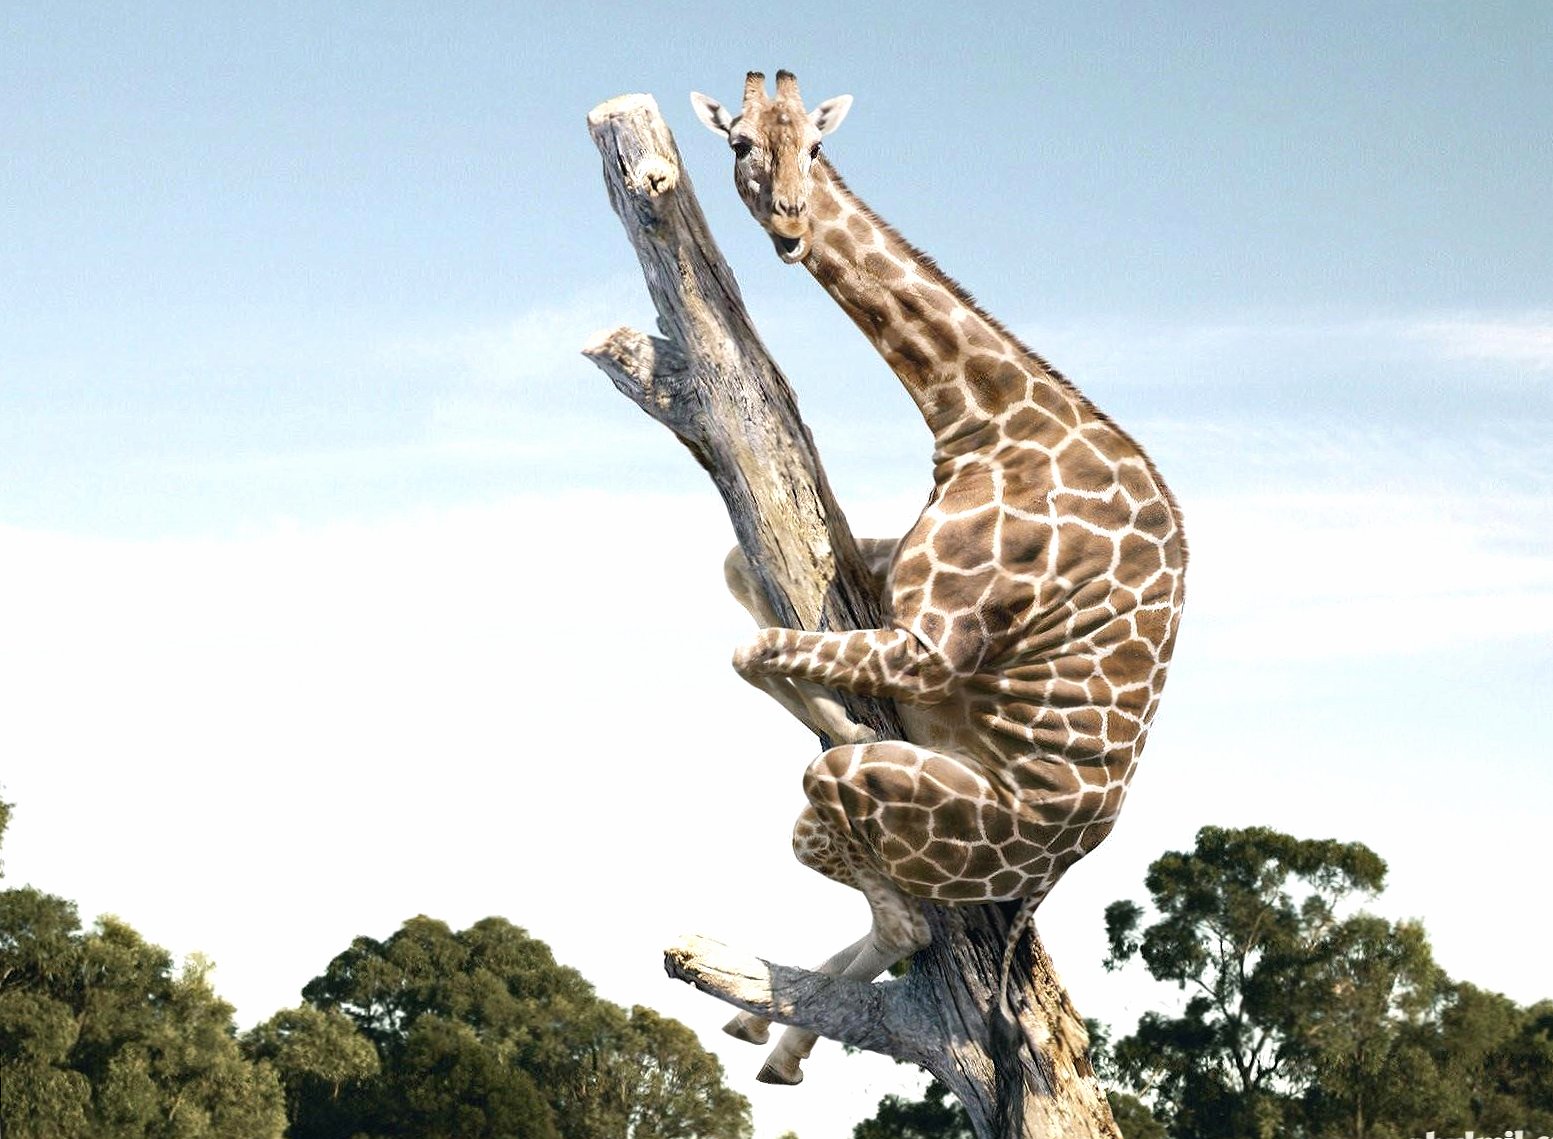 Giraffe fear in tree at 1024 x 1024 iPad size wallpapers HD quality